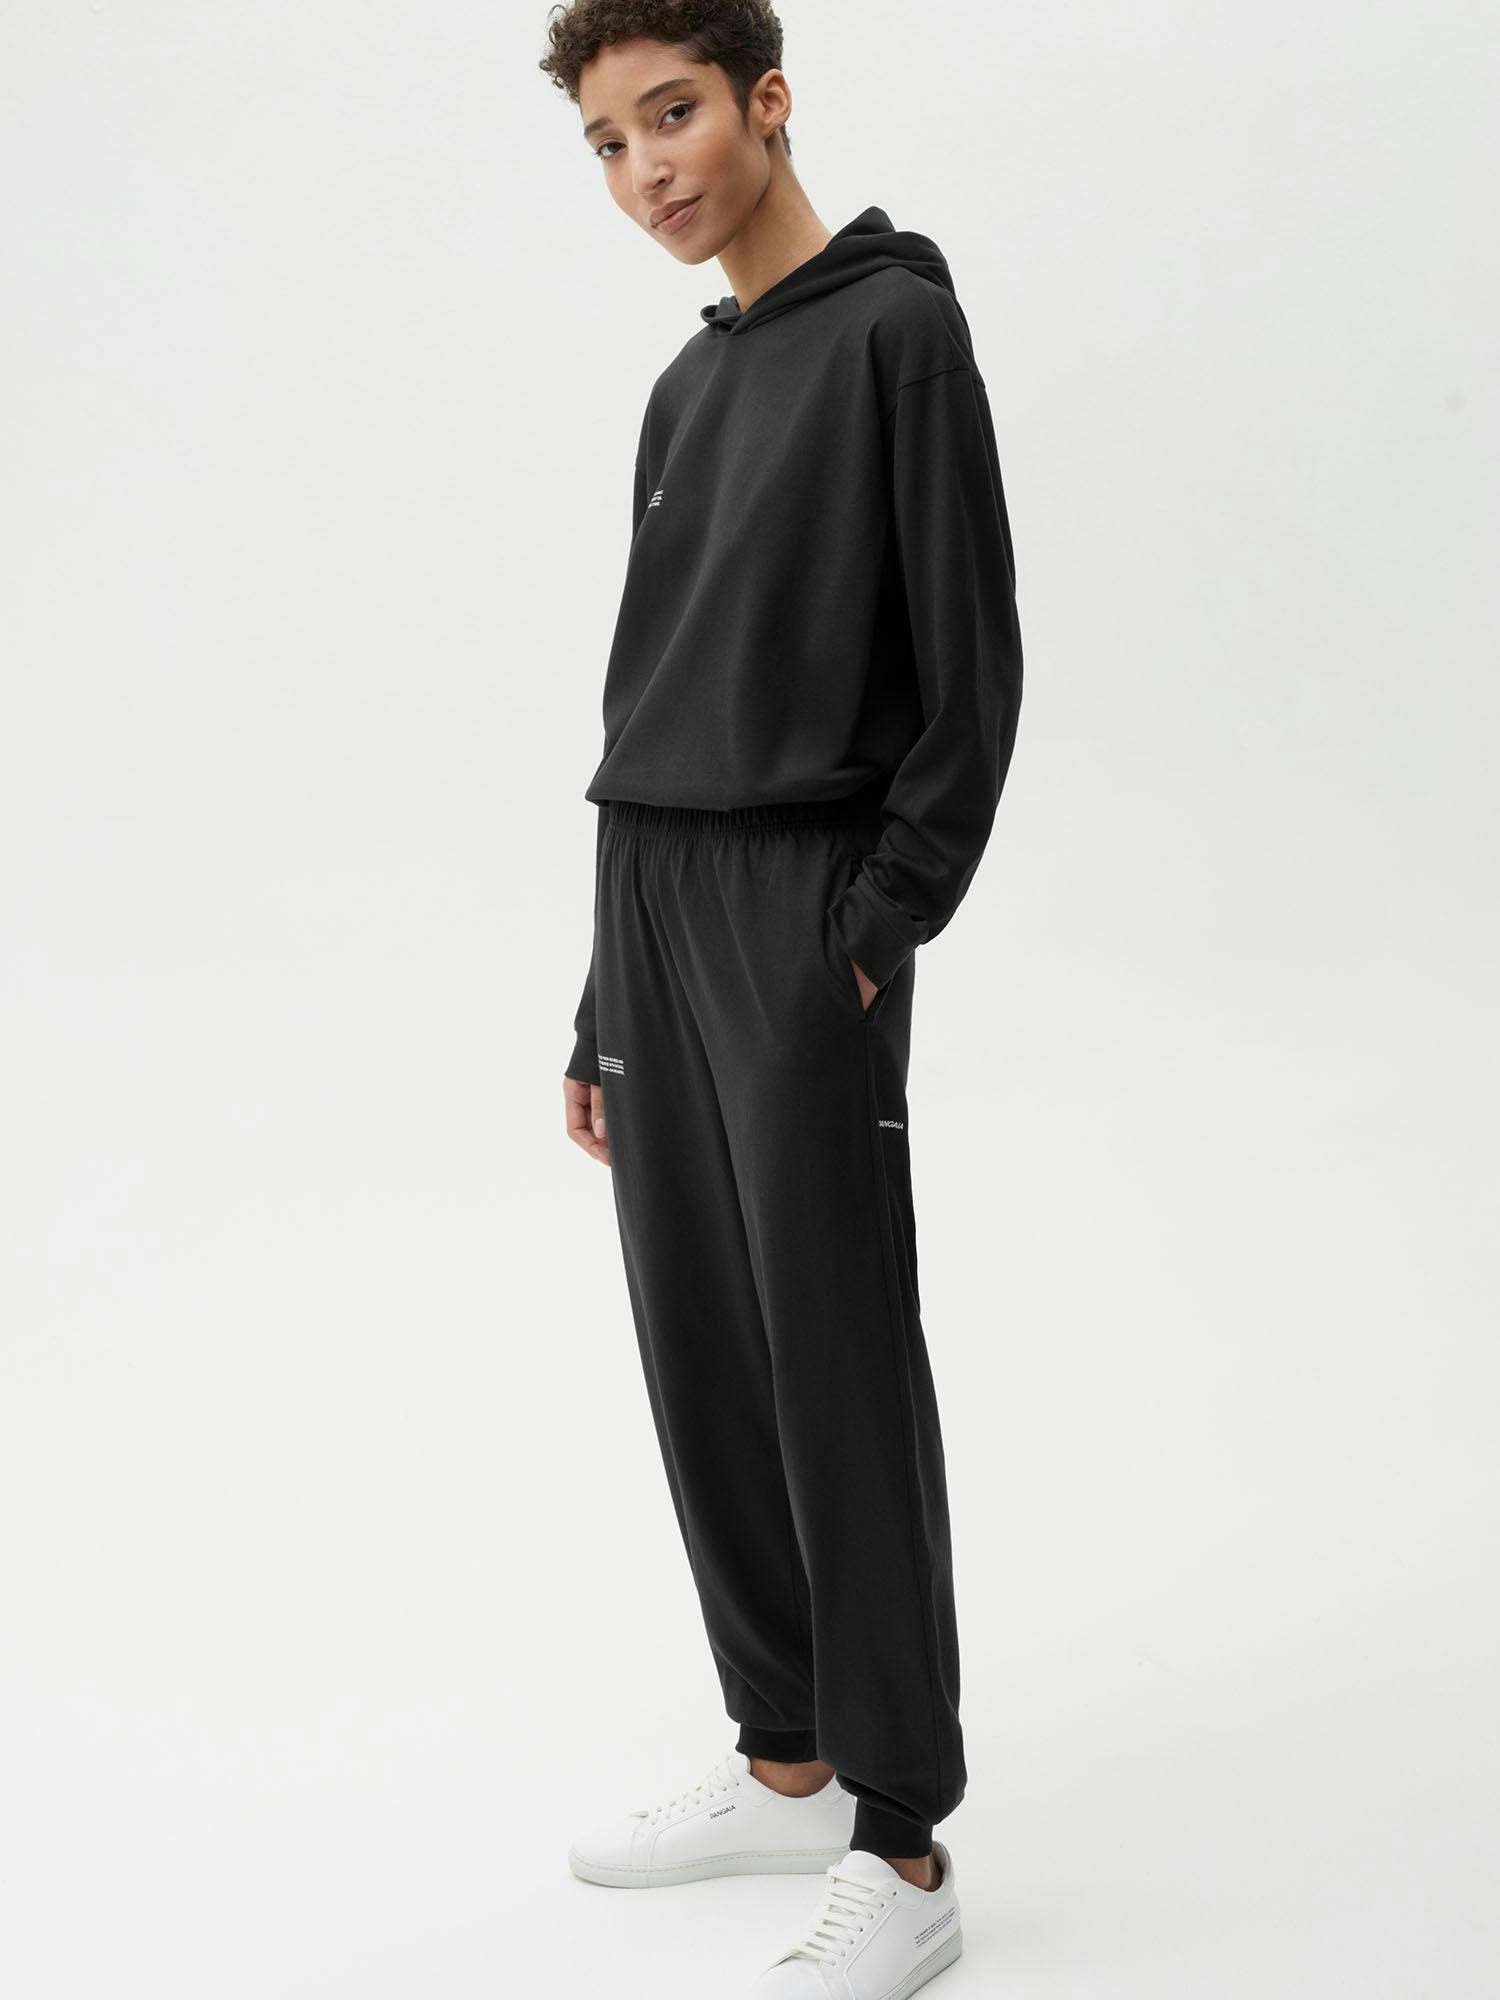 https://cdn.shopify.com/s/files/1/0035/1309/0115/products/Seaweed-Fiber-Loungewear-Track-Pants-Black-Female-Model-4.jpg?v=1662475416